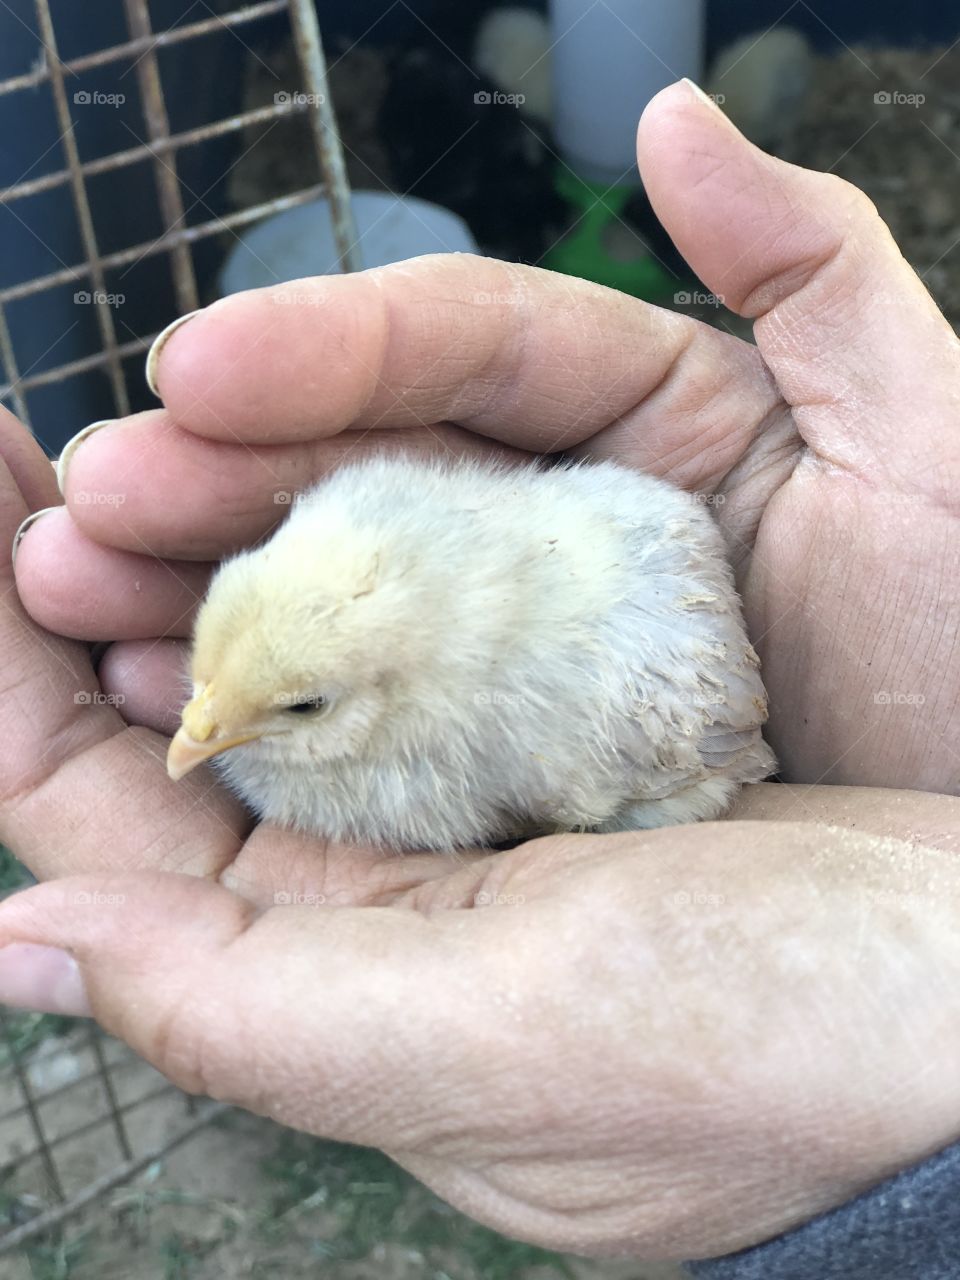 Little yellow baby chicken being held